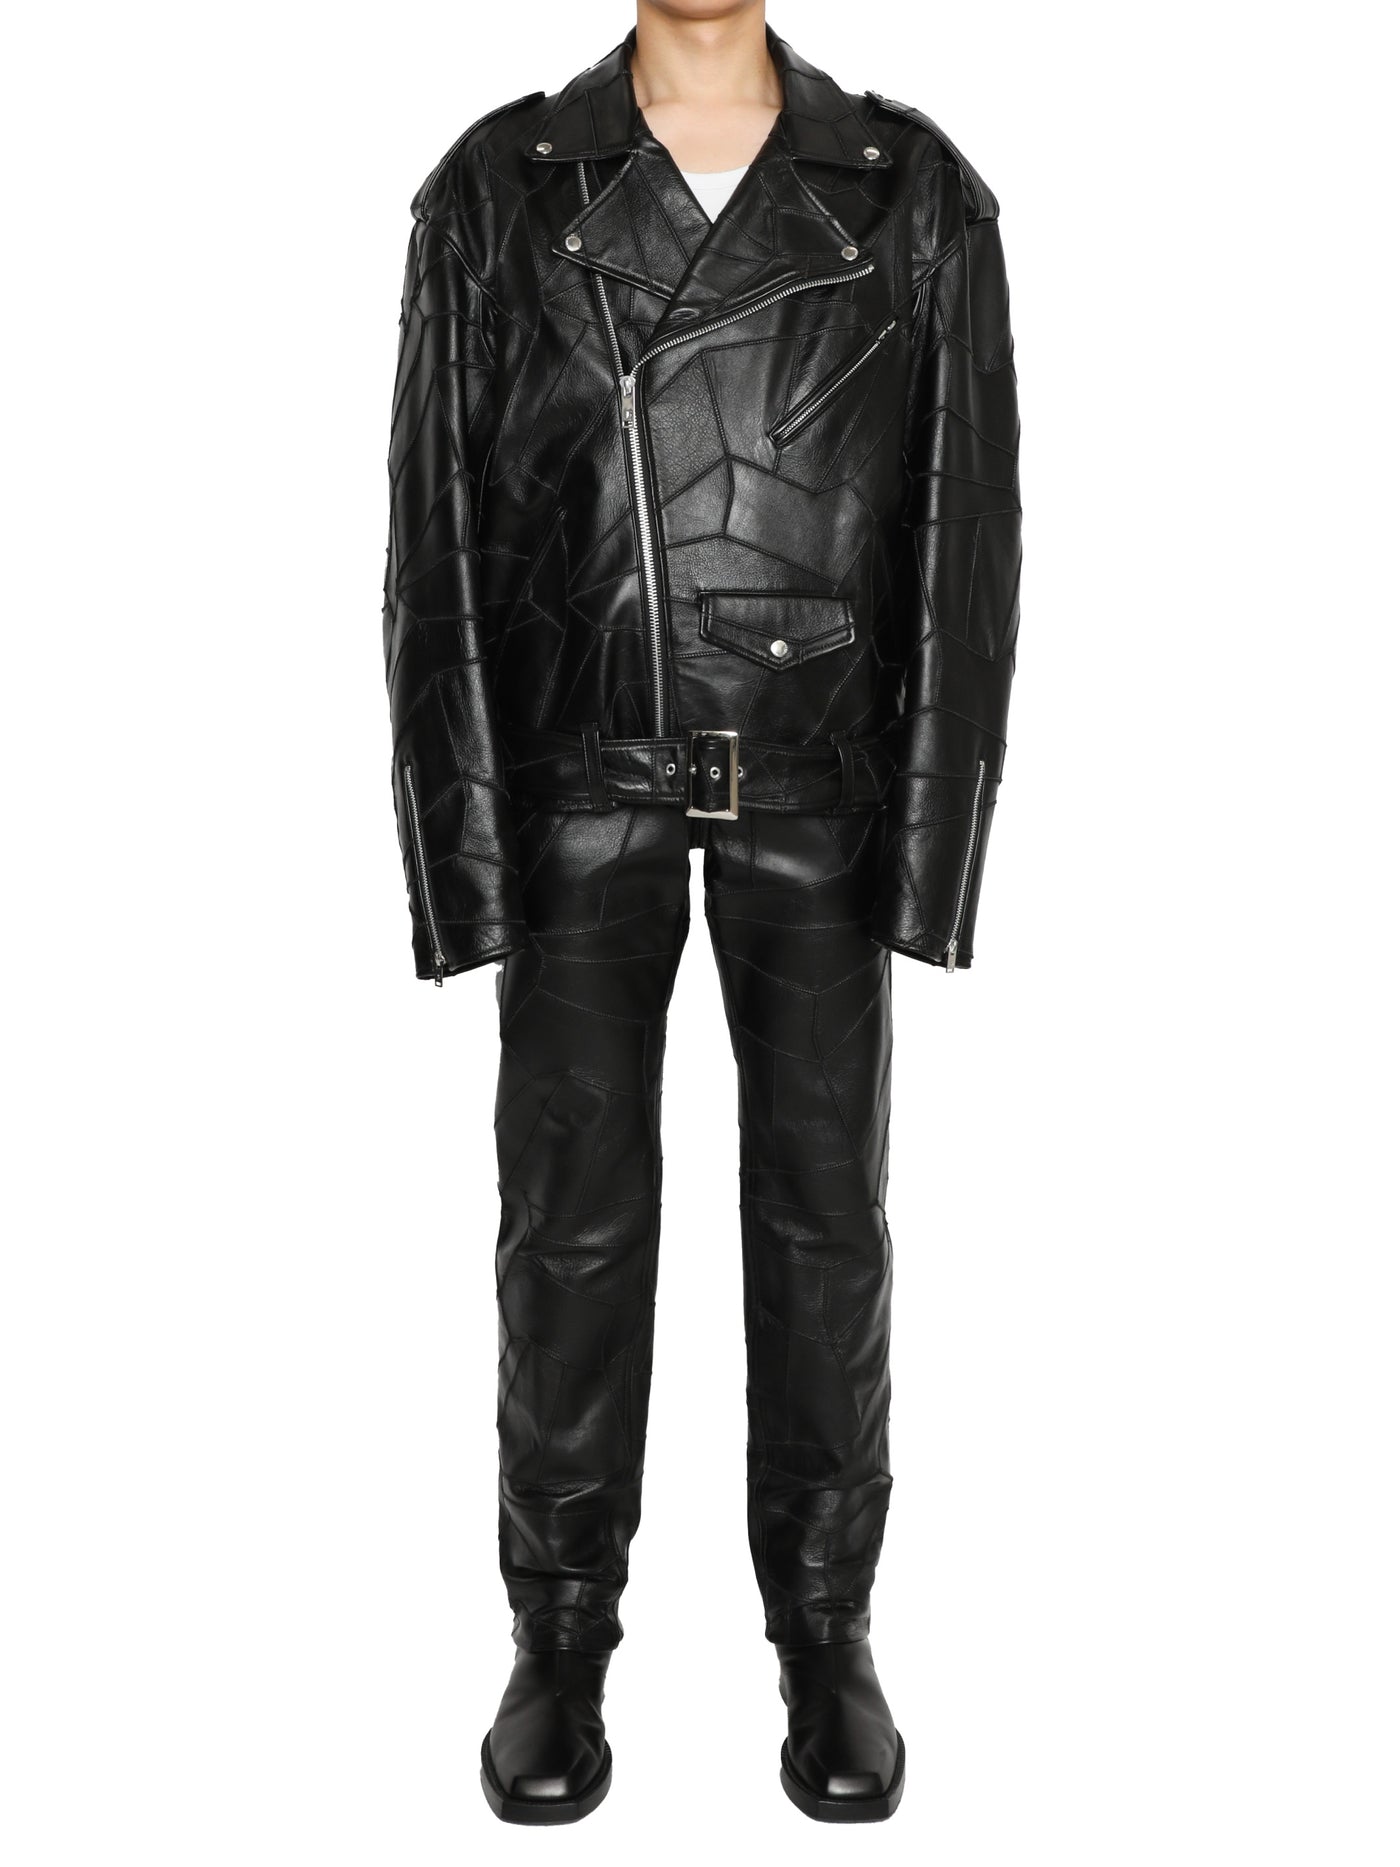 Patchwork leather oversized biker jacket